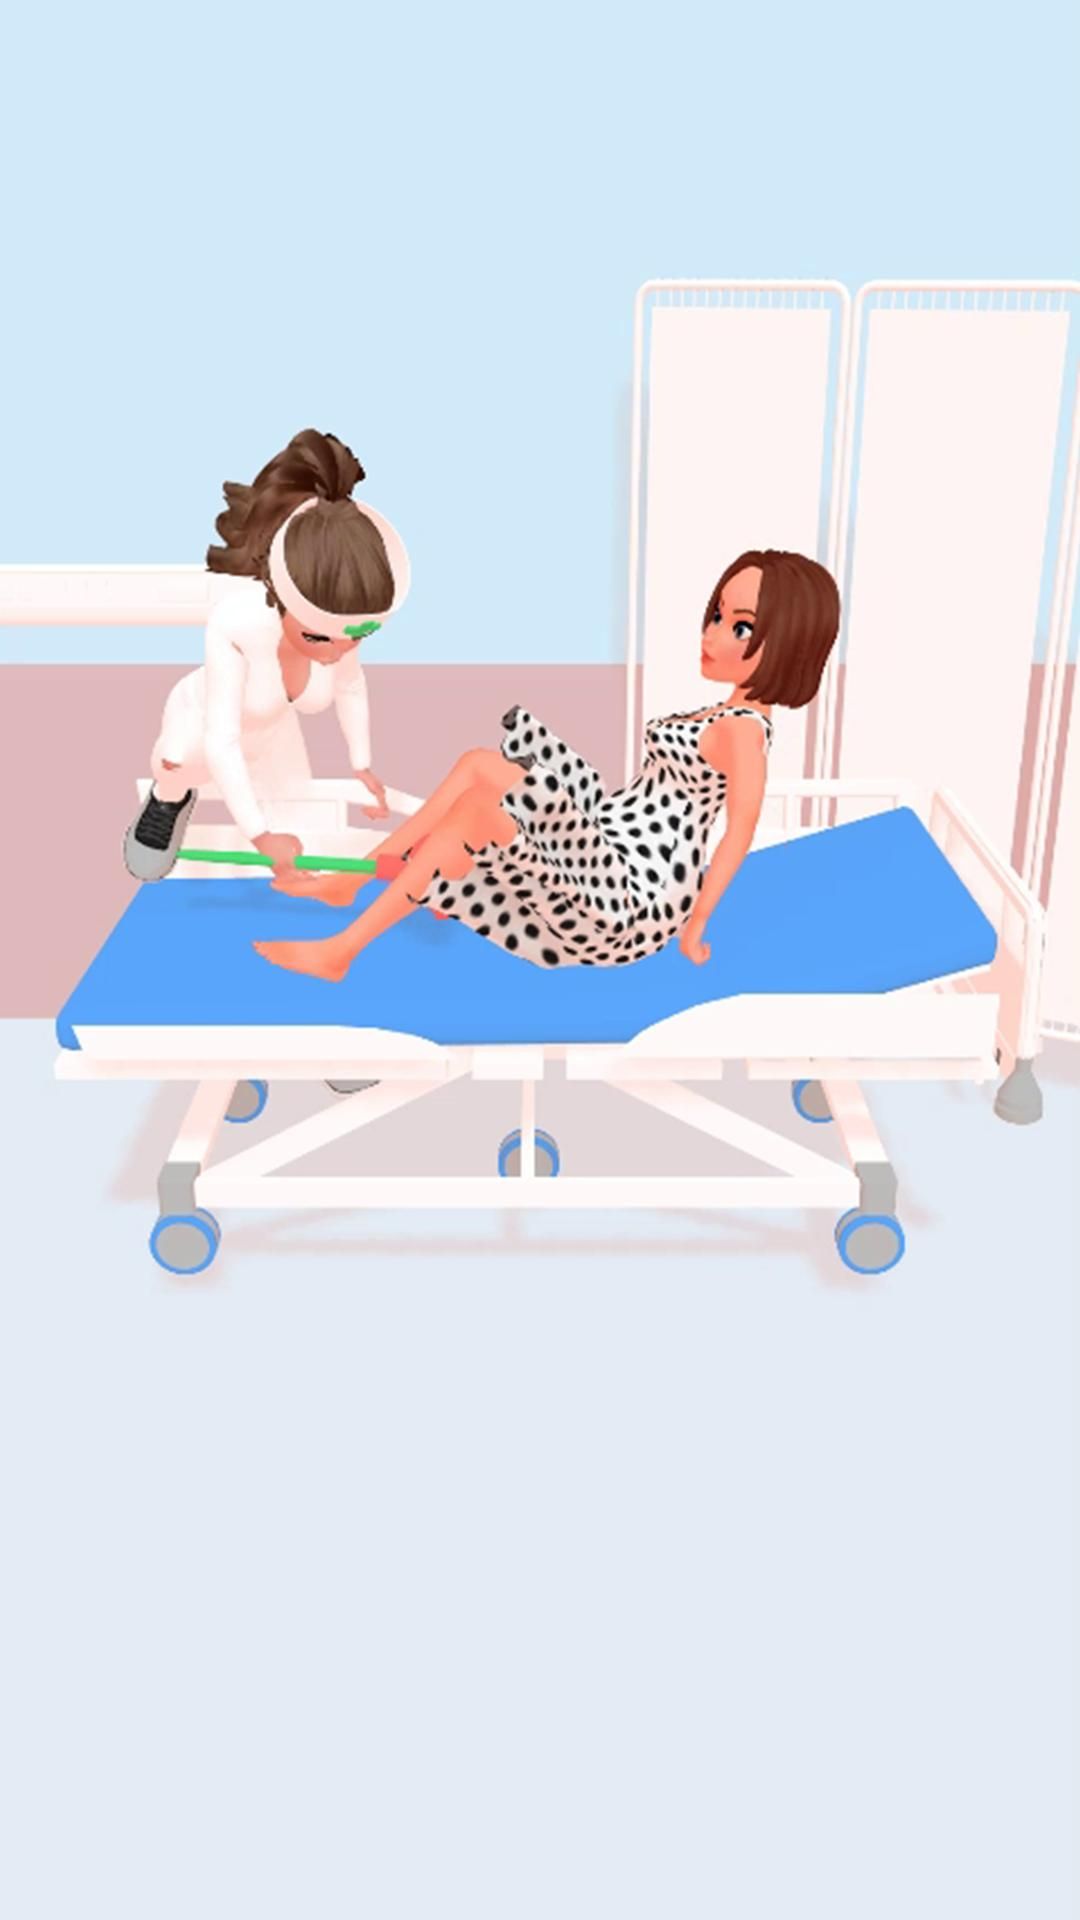 Maternity Ward游戏安卓官方版图片1